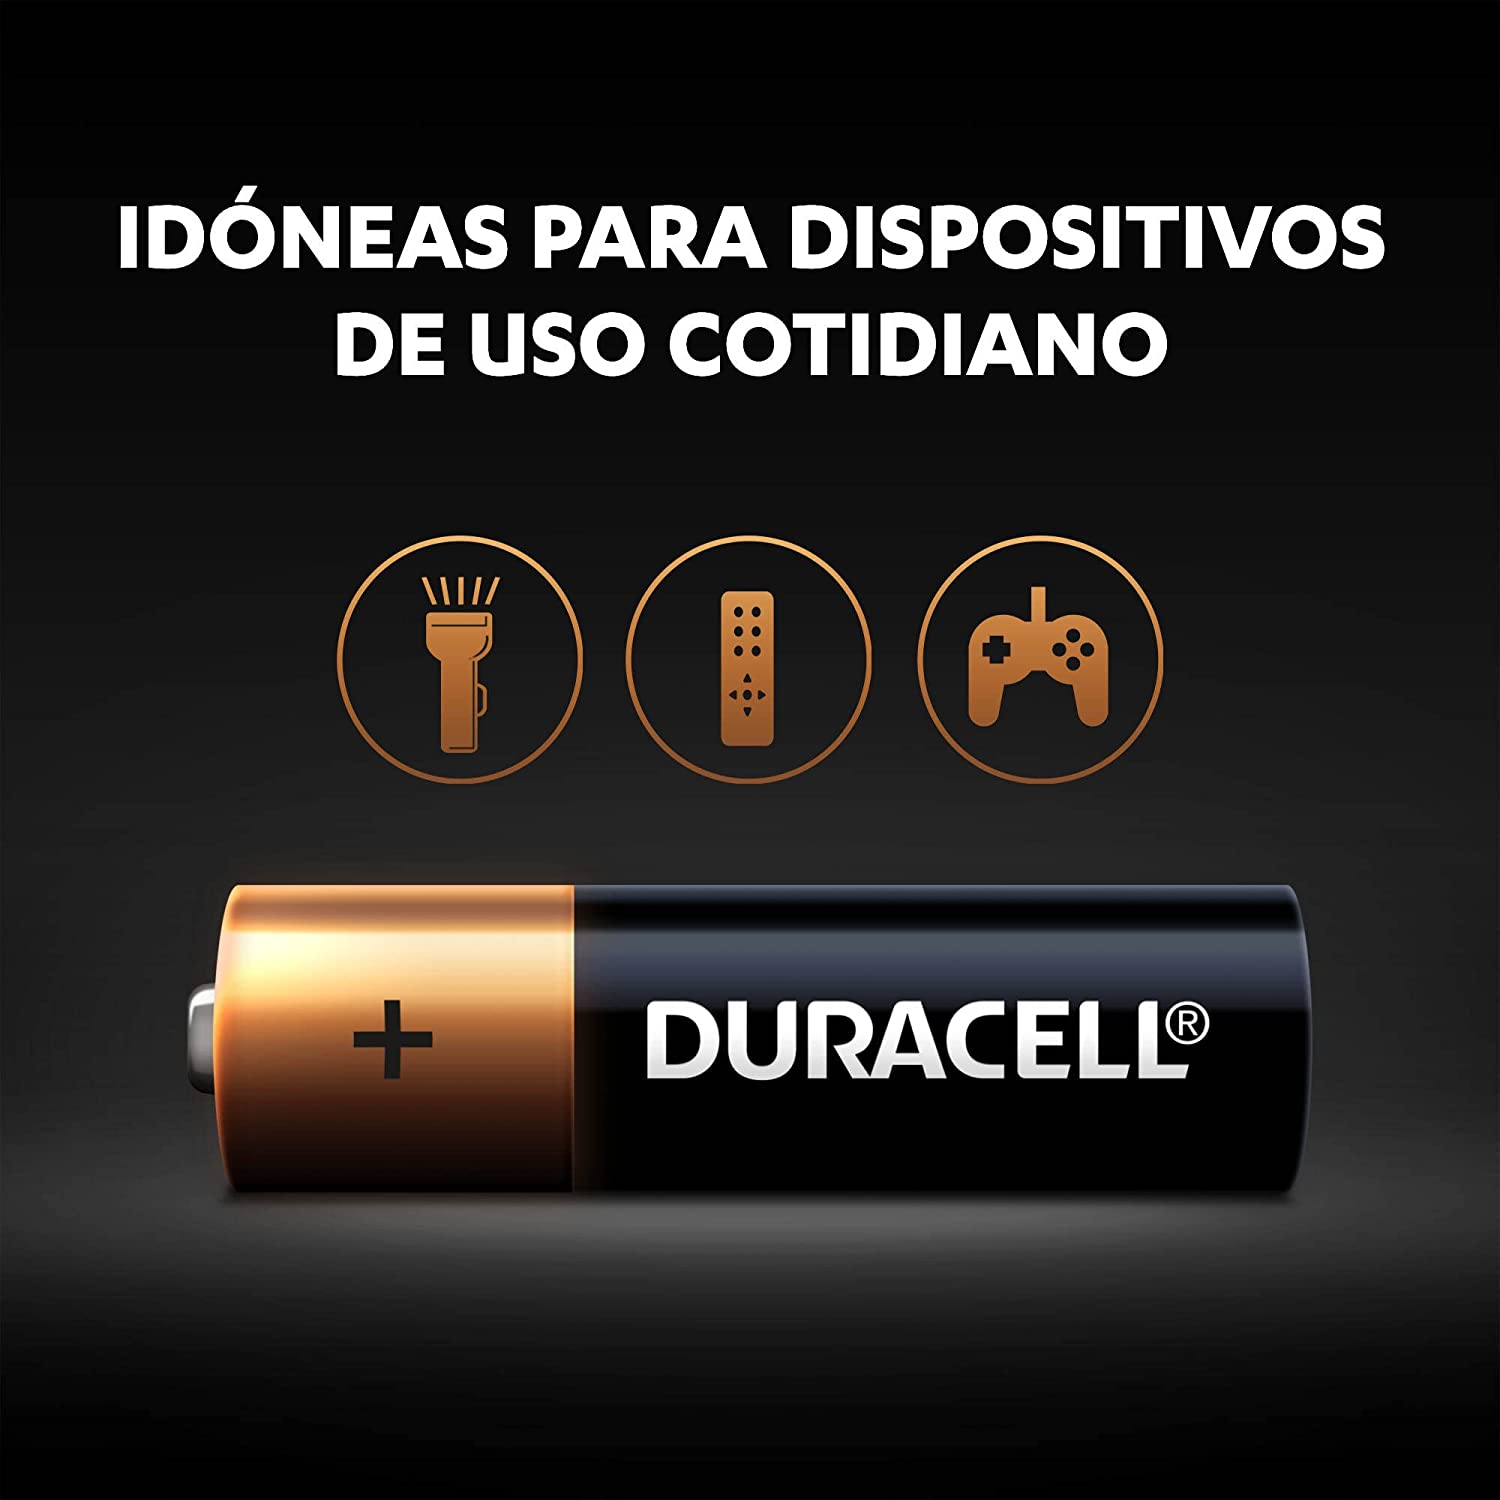 Batería Alcalina Duracell - AA 6pzs